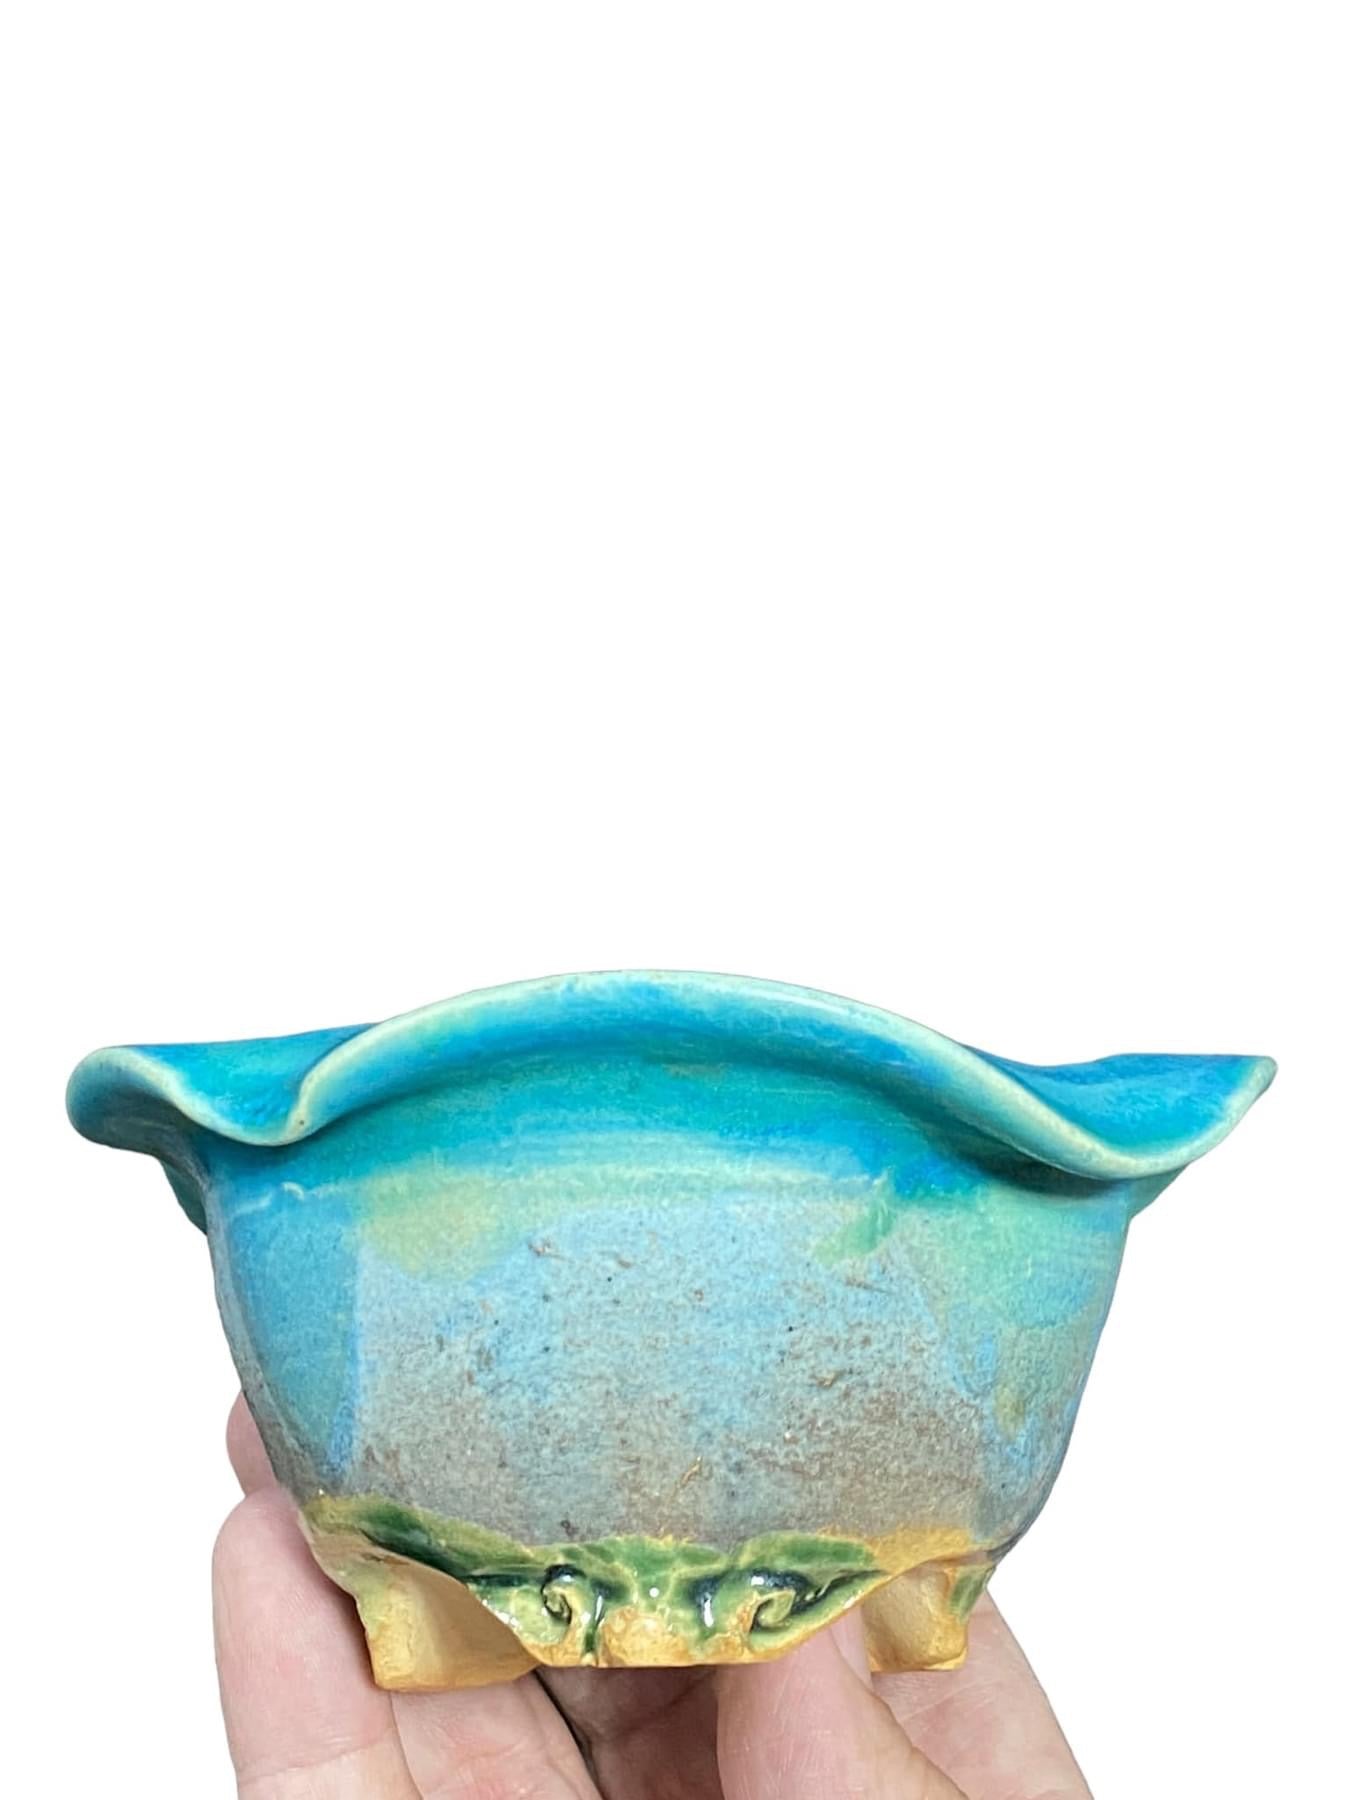 Masashi - Crab on a Glazed Bowl Bonsai or Accent Pot